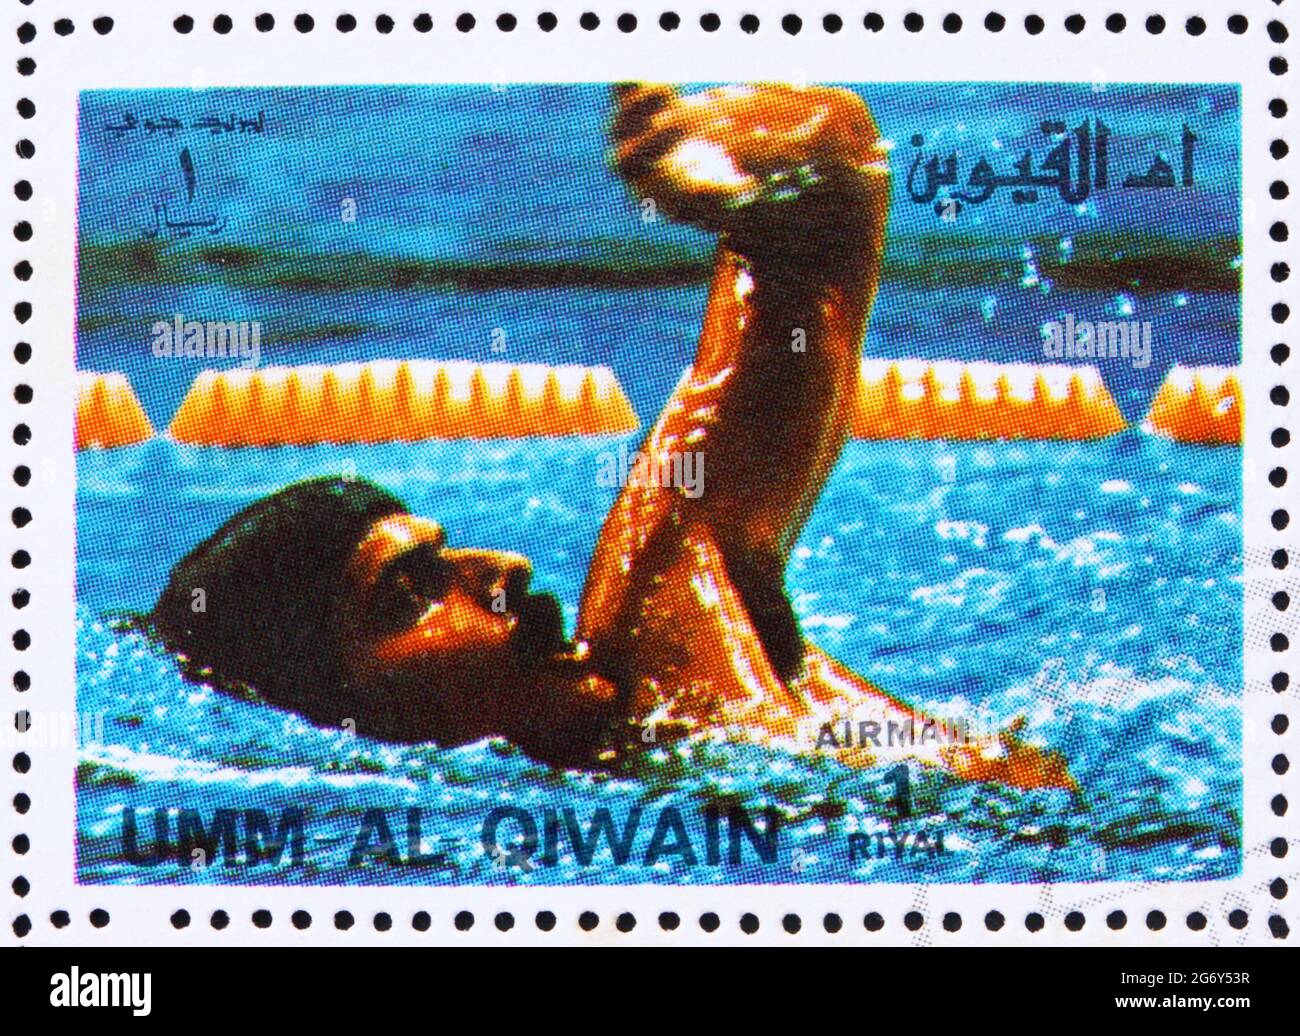 UMM AL-QUWAIN - CIRCA 1972: a stamp printed in the Umm al-Quwain shows Mark Spitz, USA, Winner of the Summer Olympics Munich 1972, circa 1972 Stock Photo